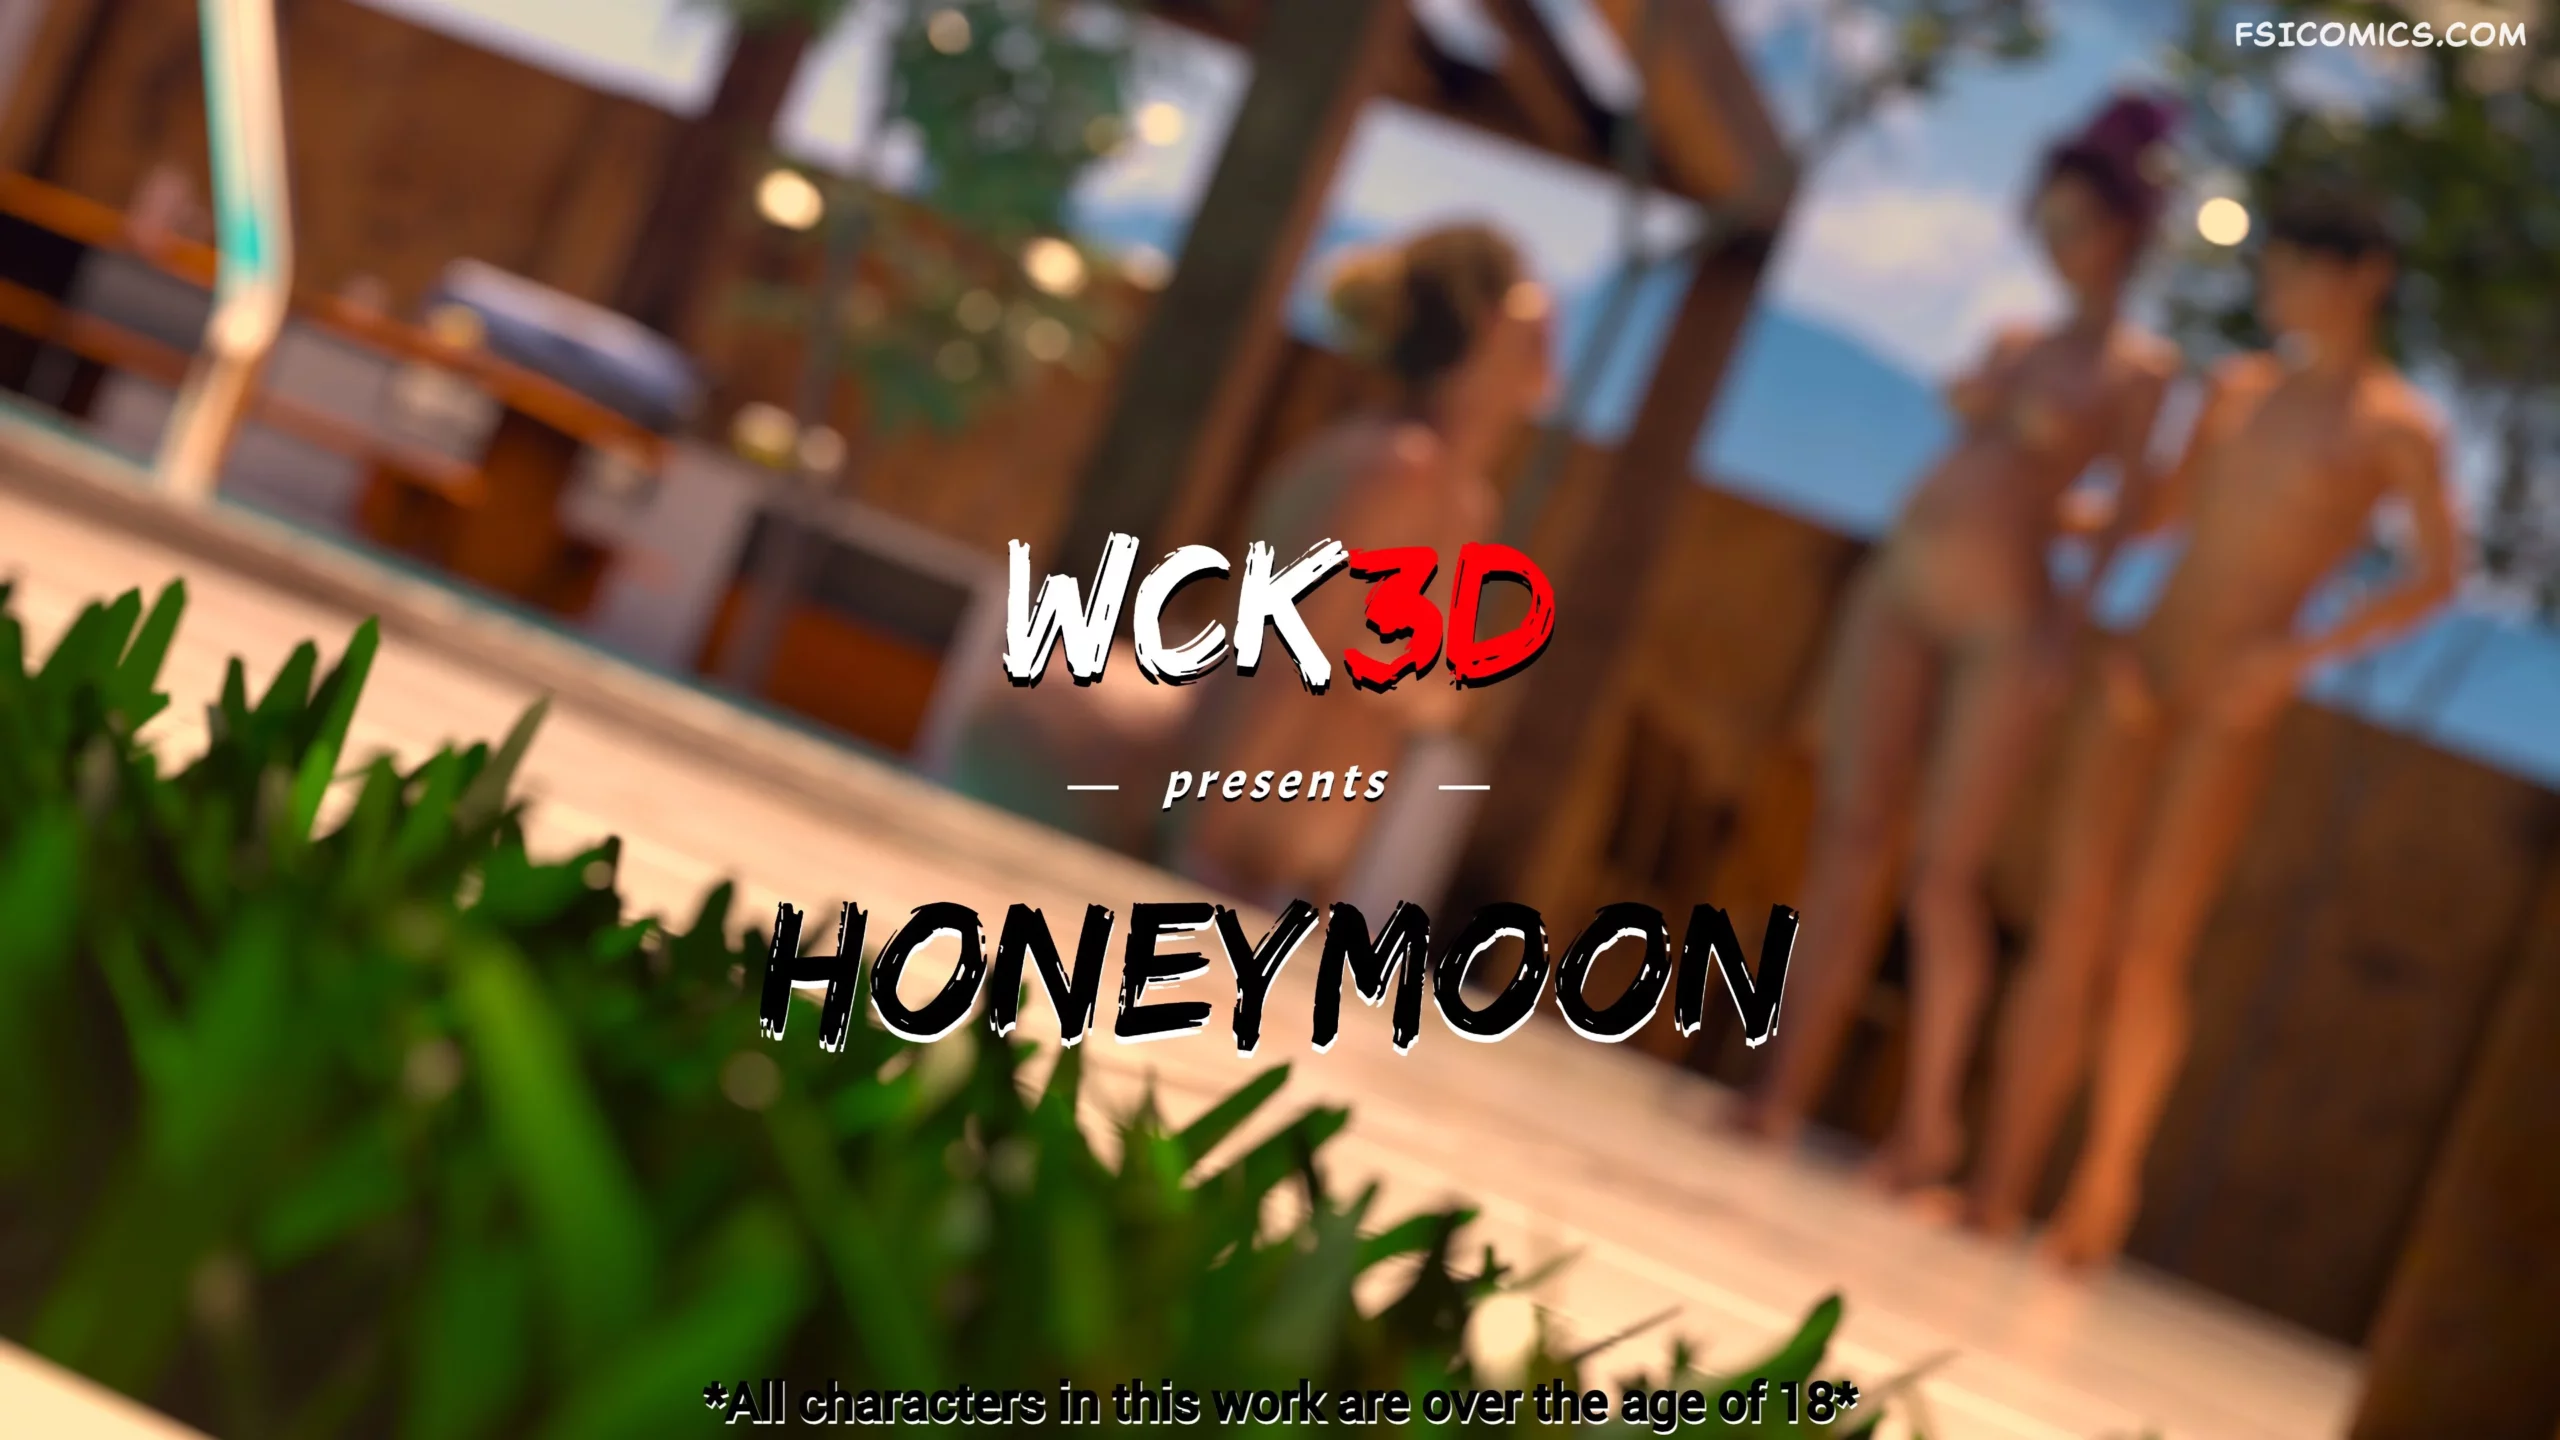 Between Us - Honeymoon - WCK3D - 15 - FSIComics